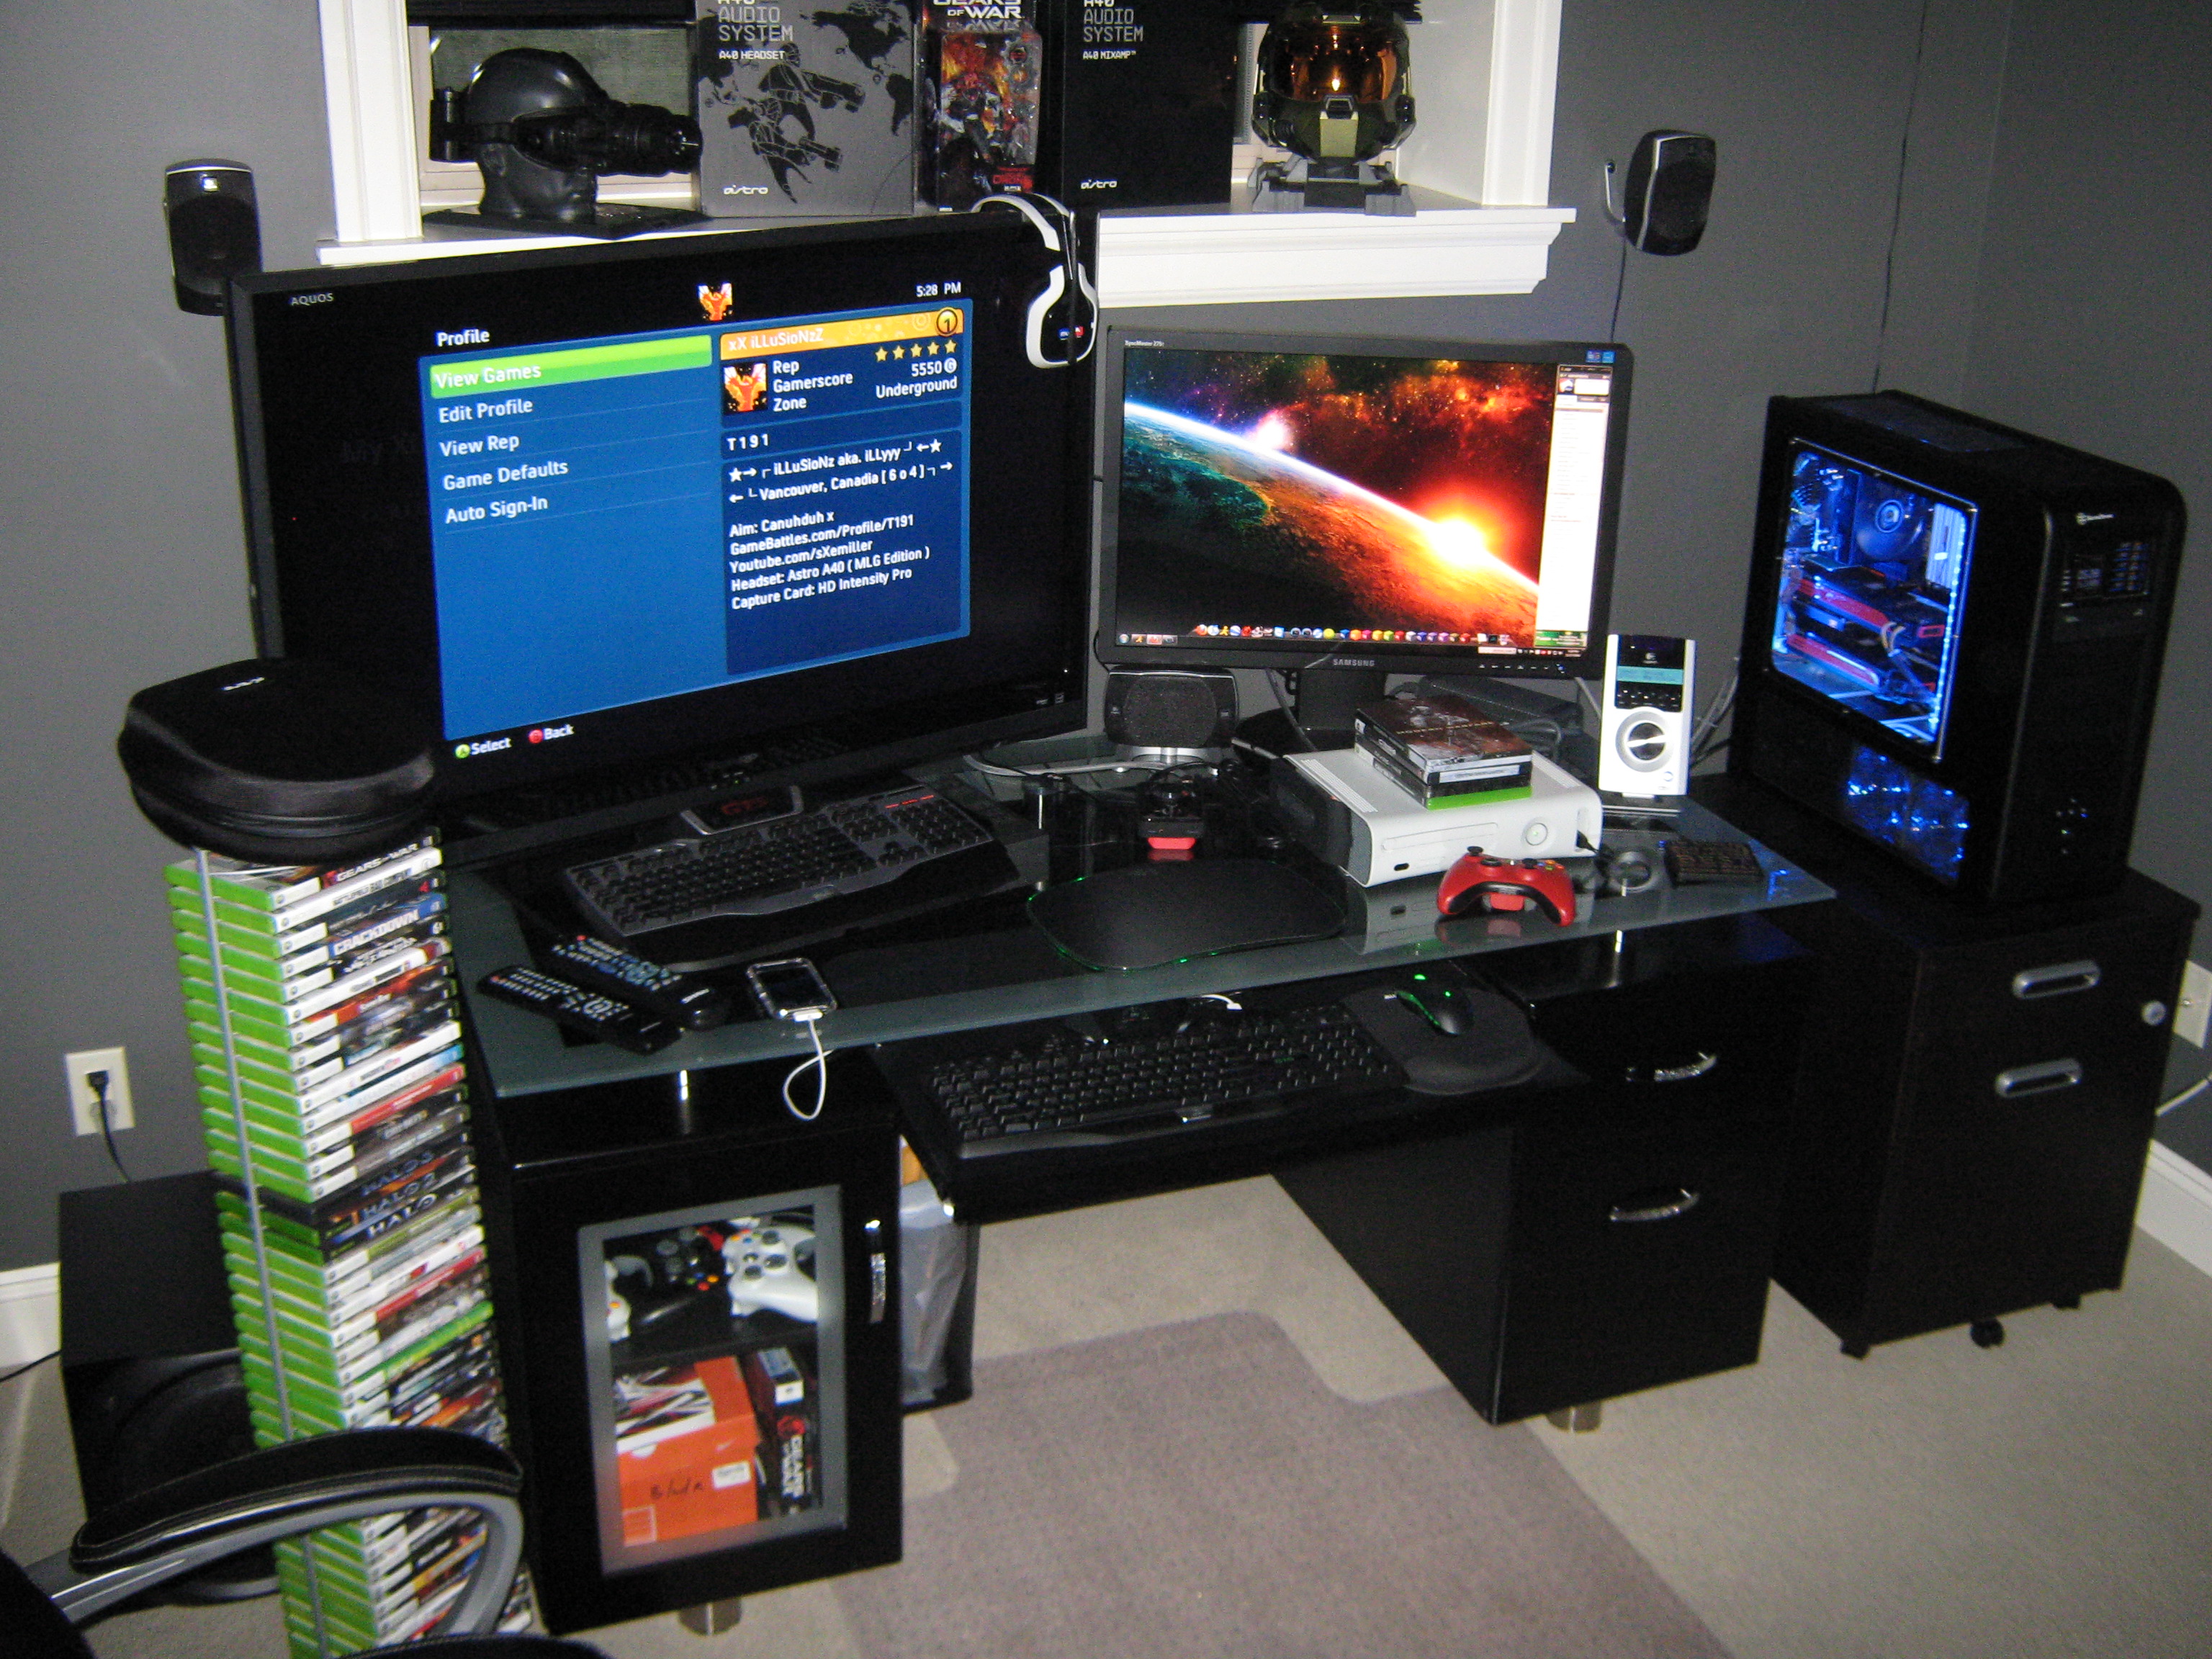 fond d'écran de configuration de jeu,bureau d'ordinateur,la technologie,gadget,bureau,meubles